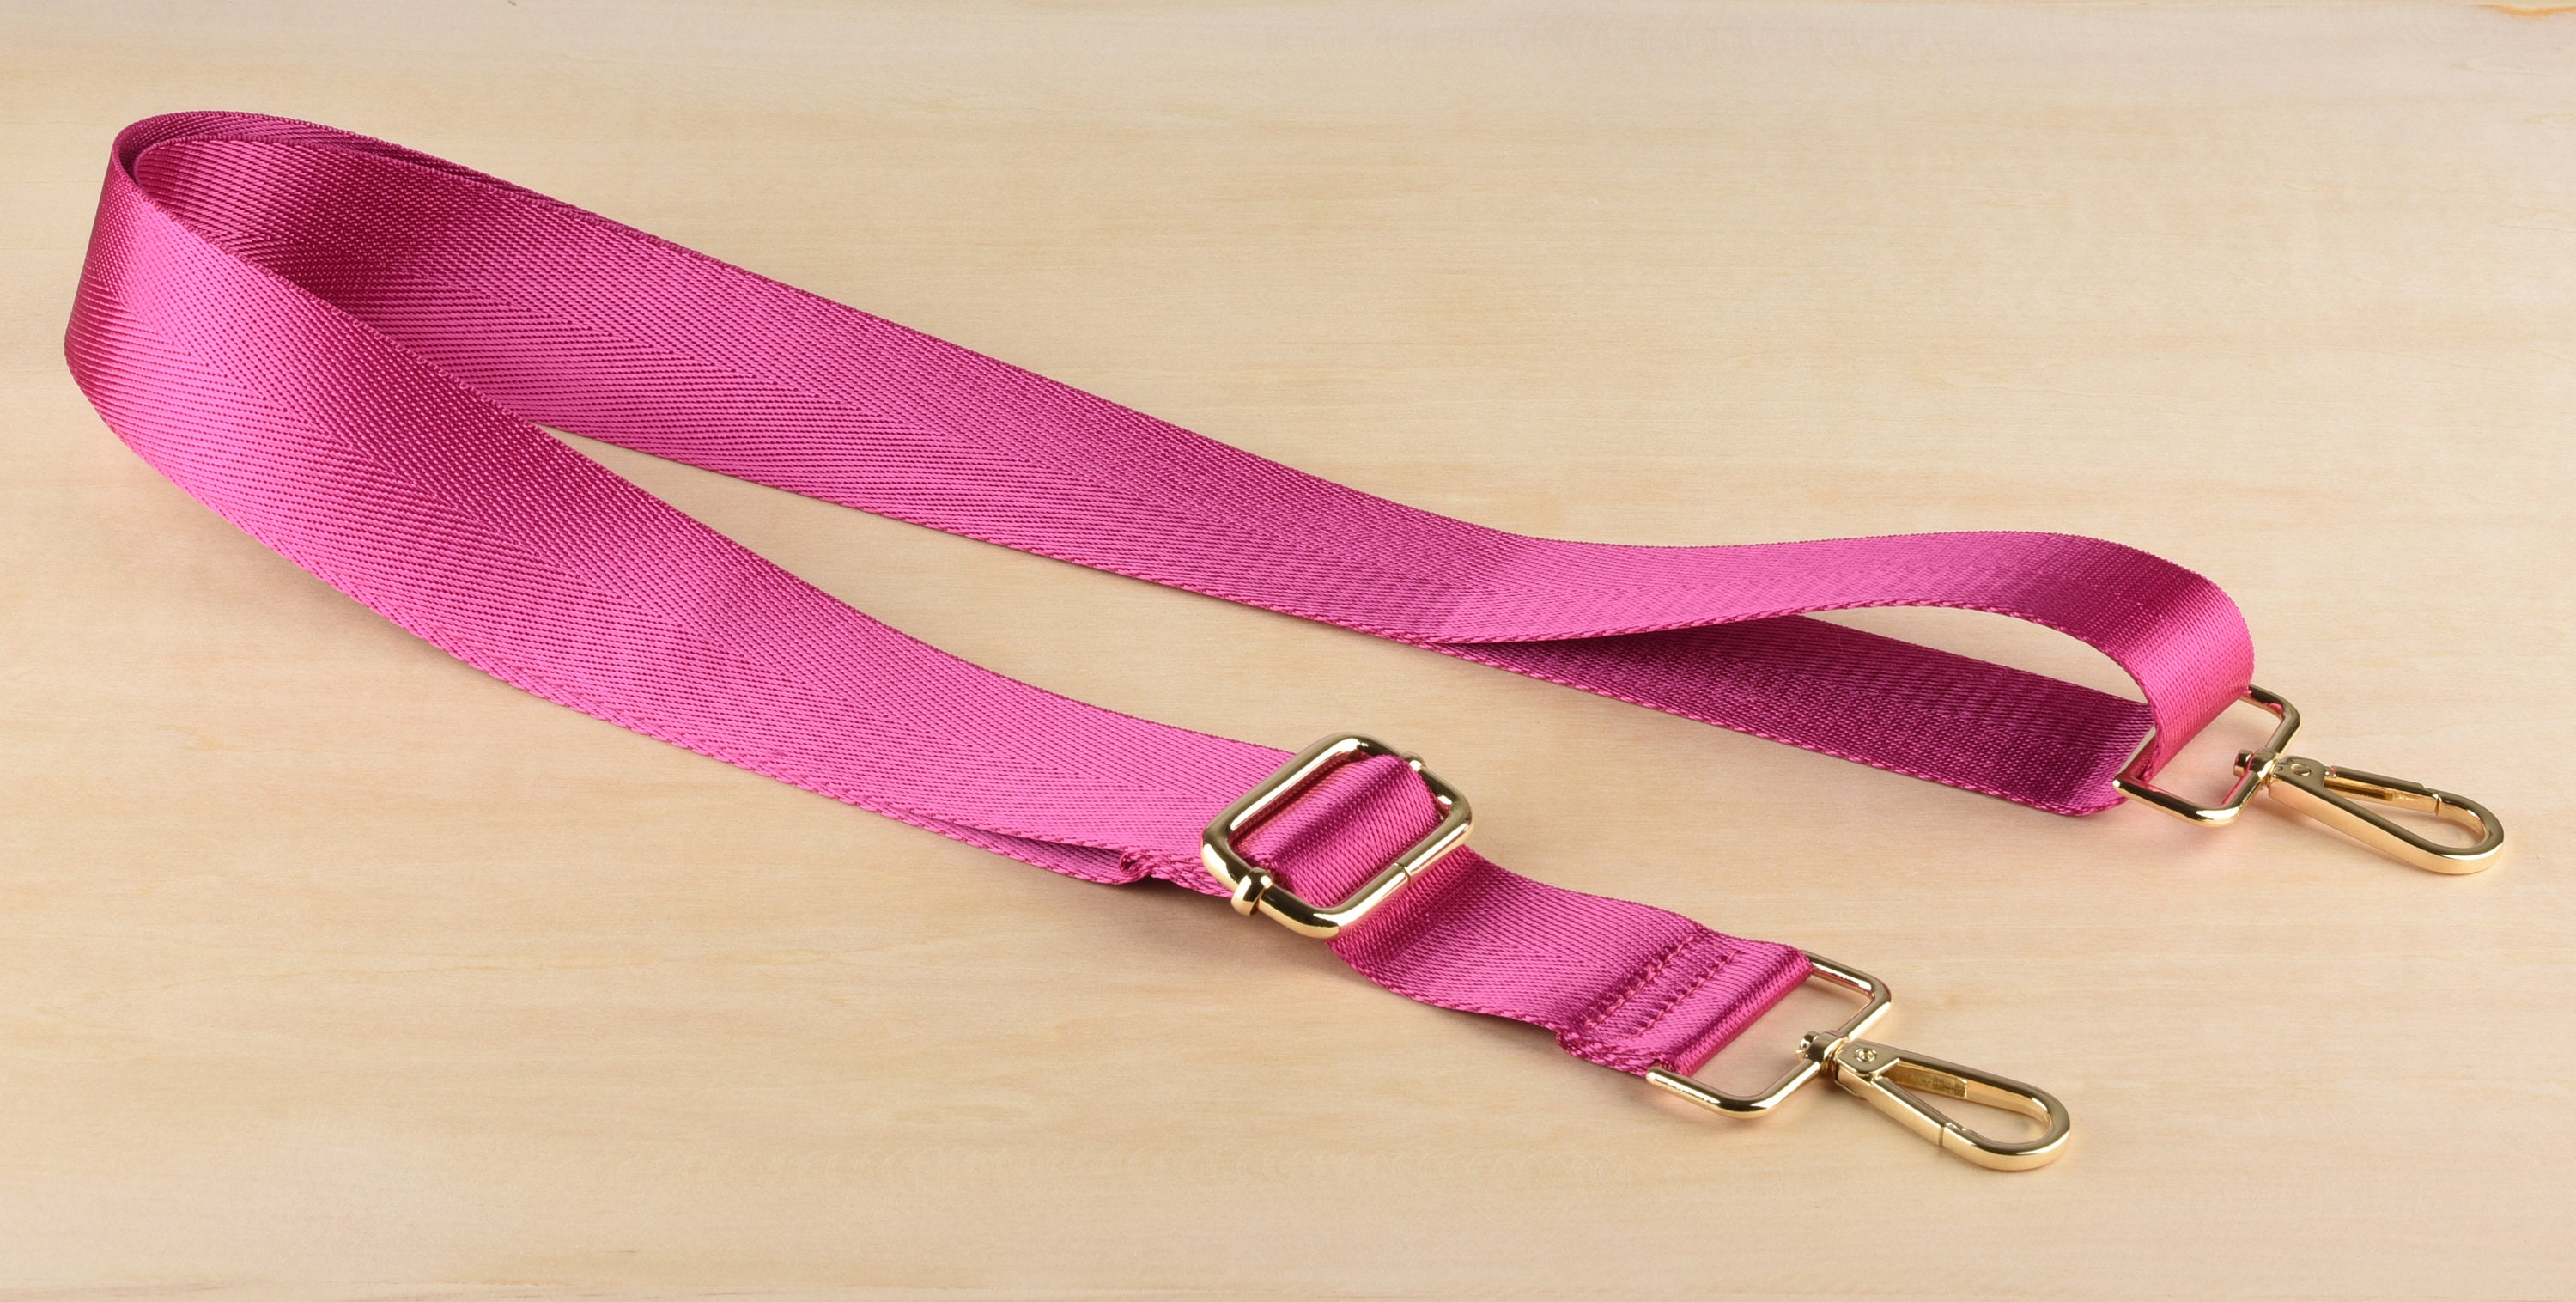 Adjustable Guitar Bag Strap, Pink/Tan Daisy print – leather